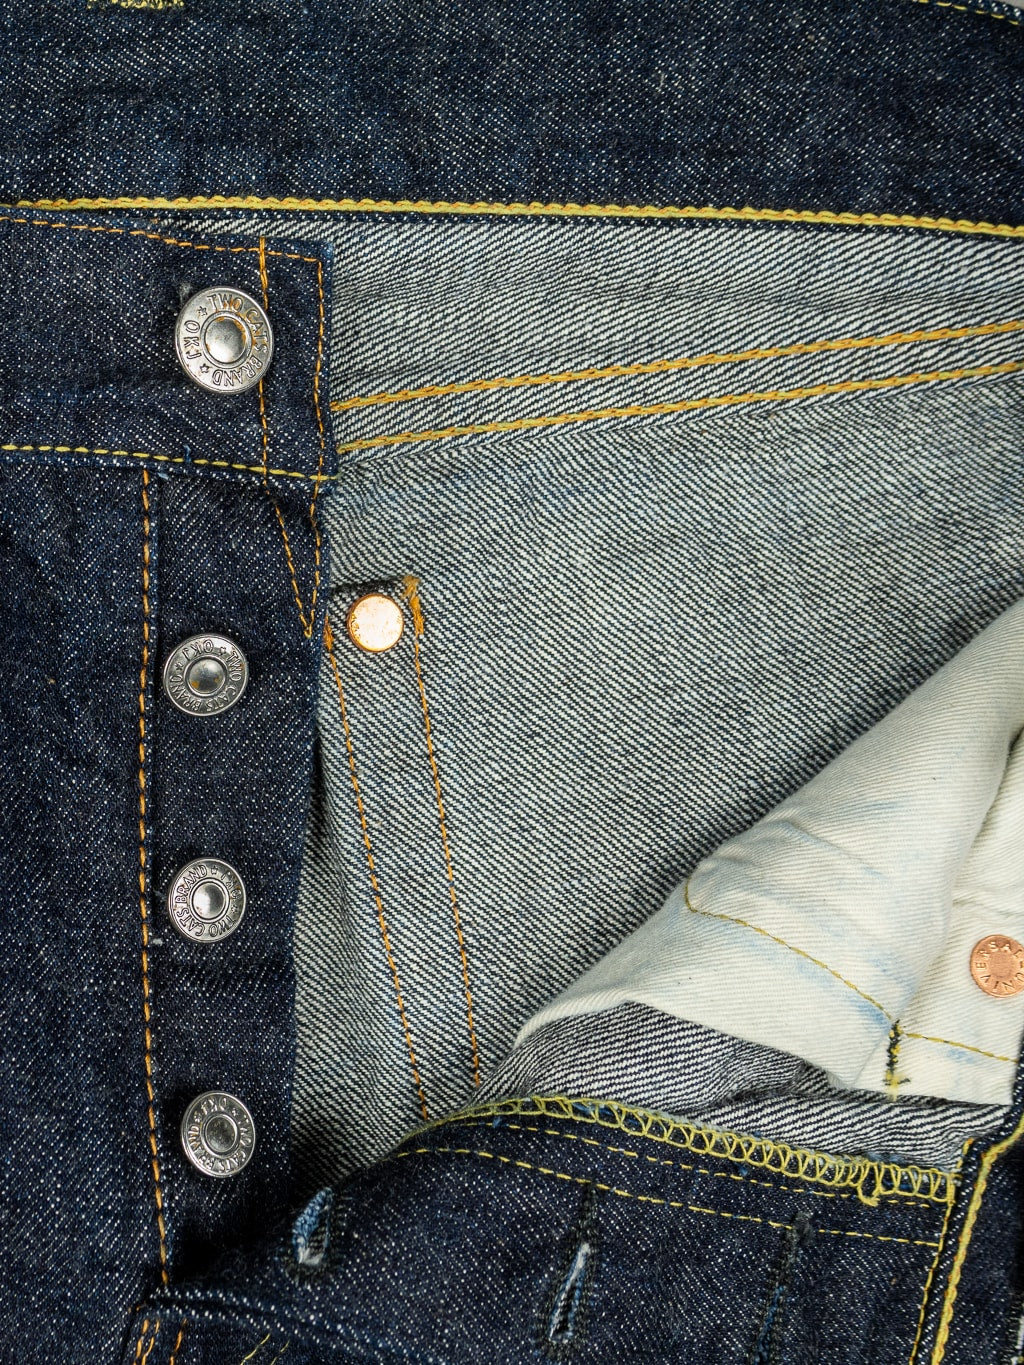 TCB 50s Slim R Jeans lining pocket bag